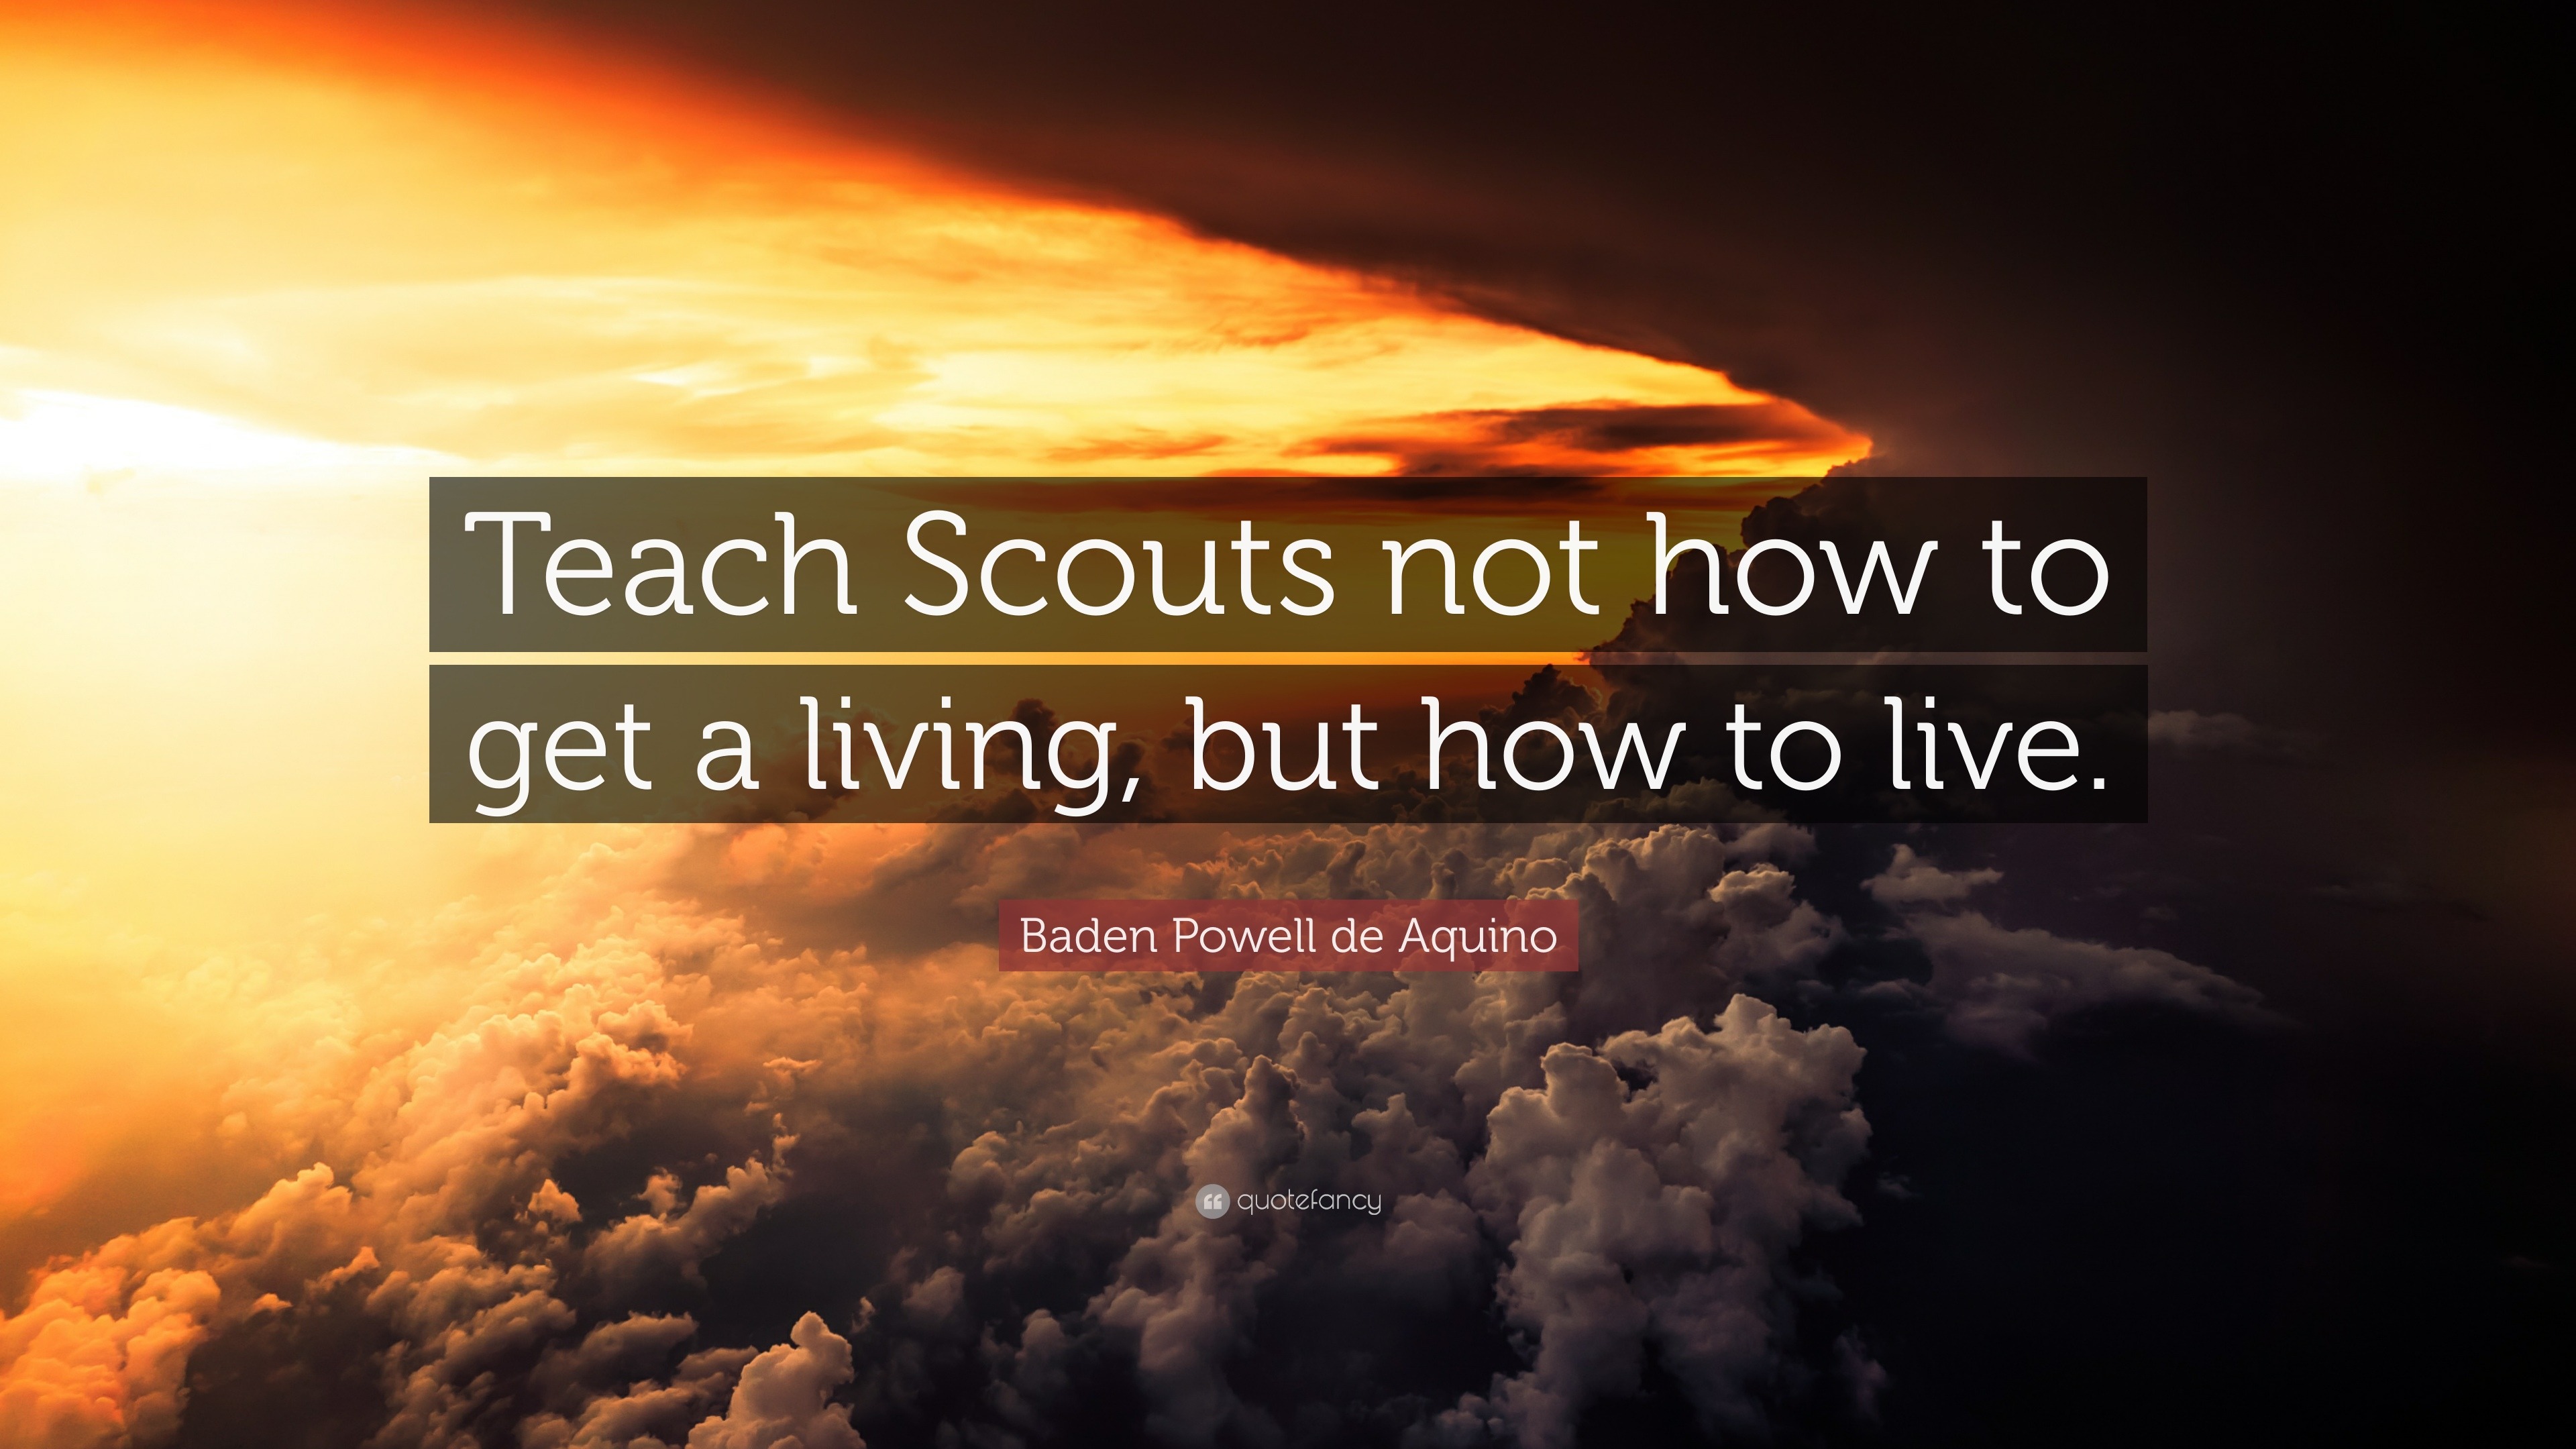 baden-powell-de-aquino-quote-teach-scouts-not-how-to-get-a-living